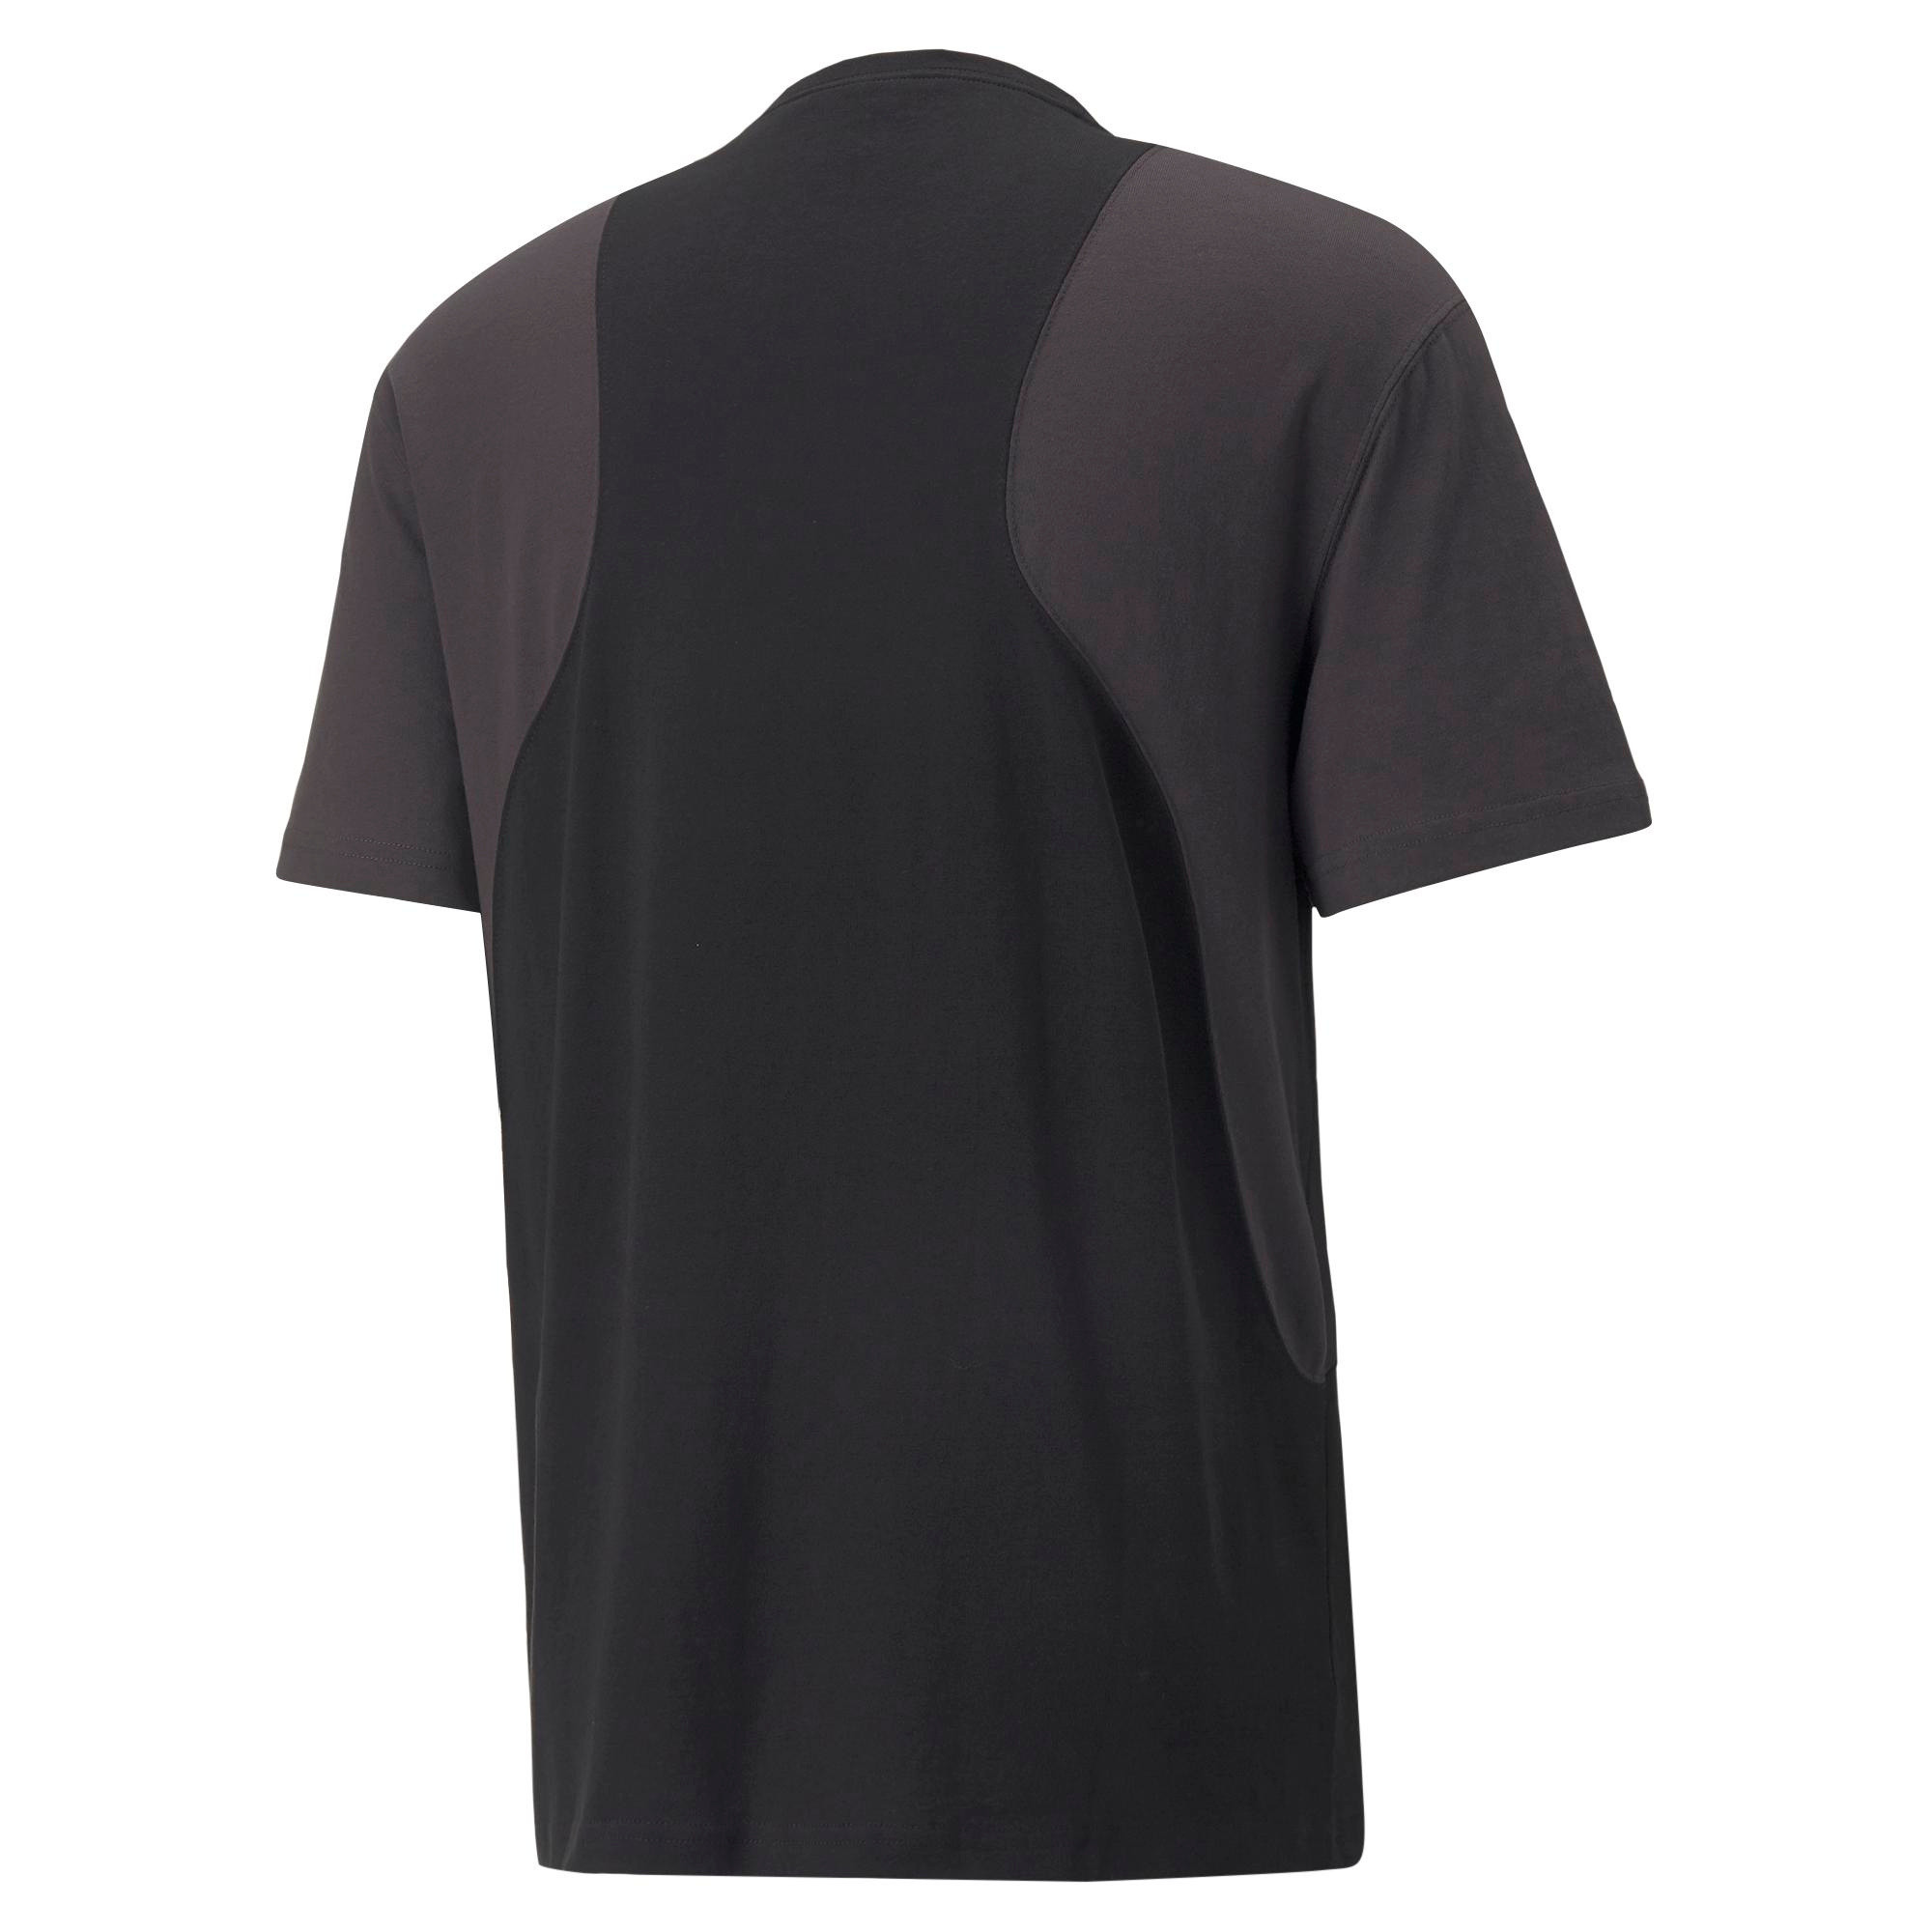 Puma x Market T-shirt, Black, large image number 1